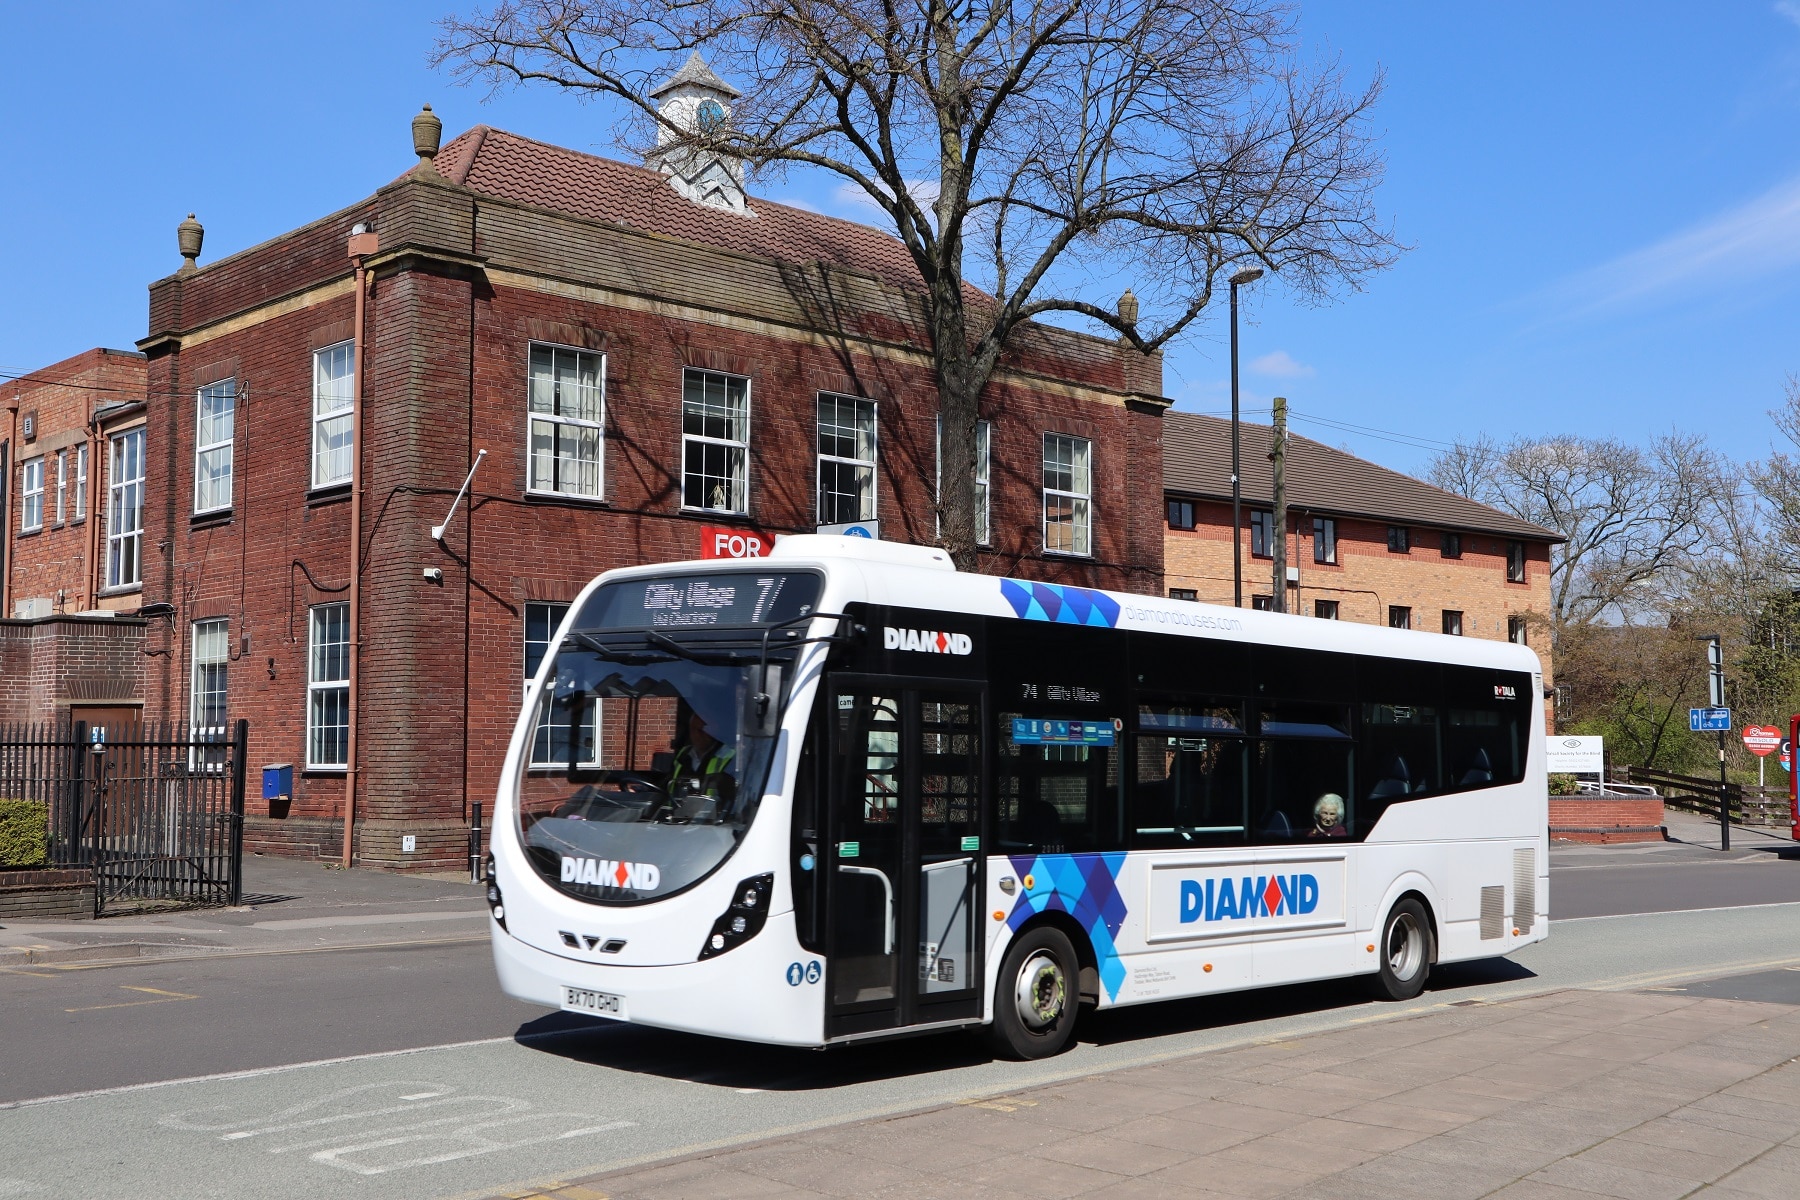 Bus Service Improvement Plan guidance published